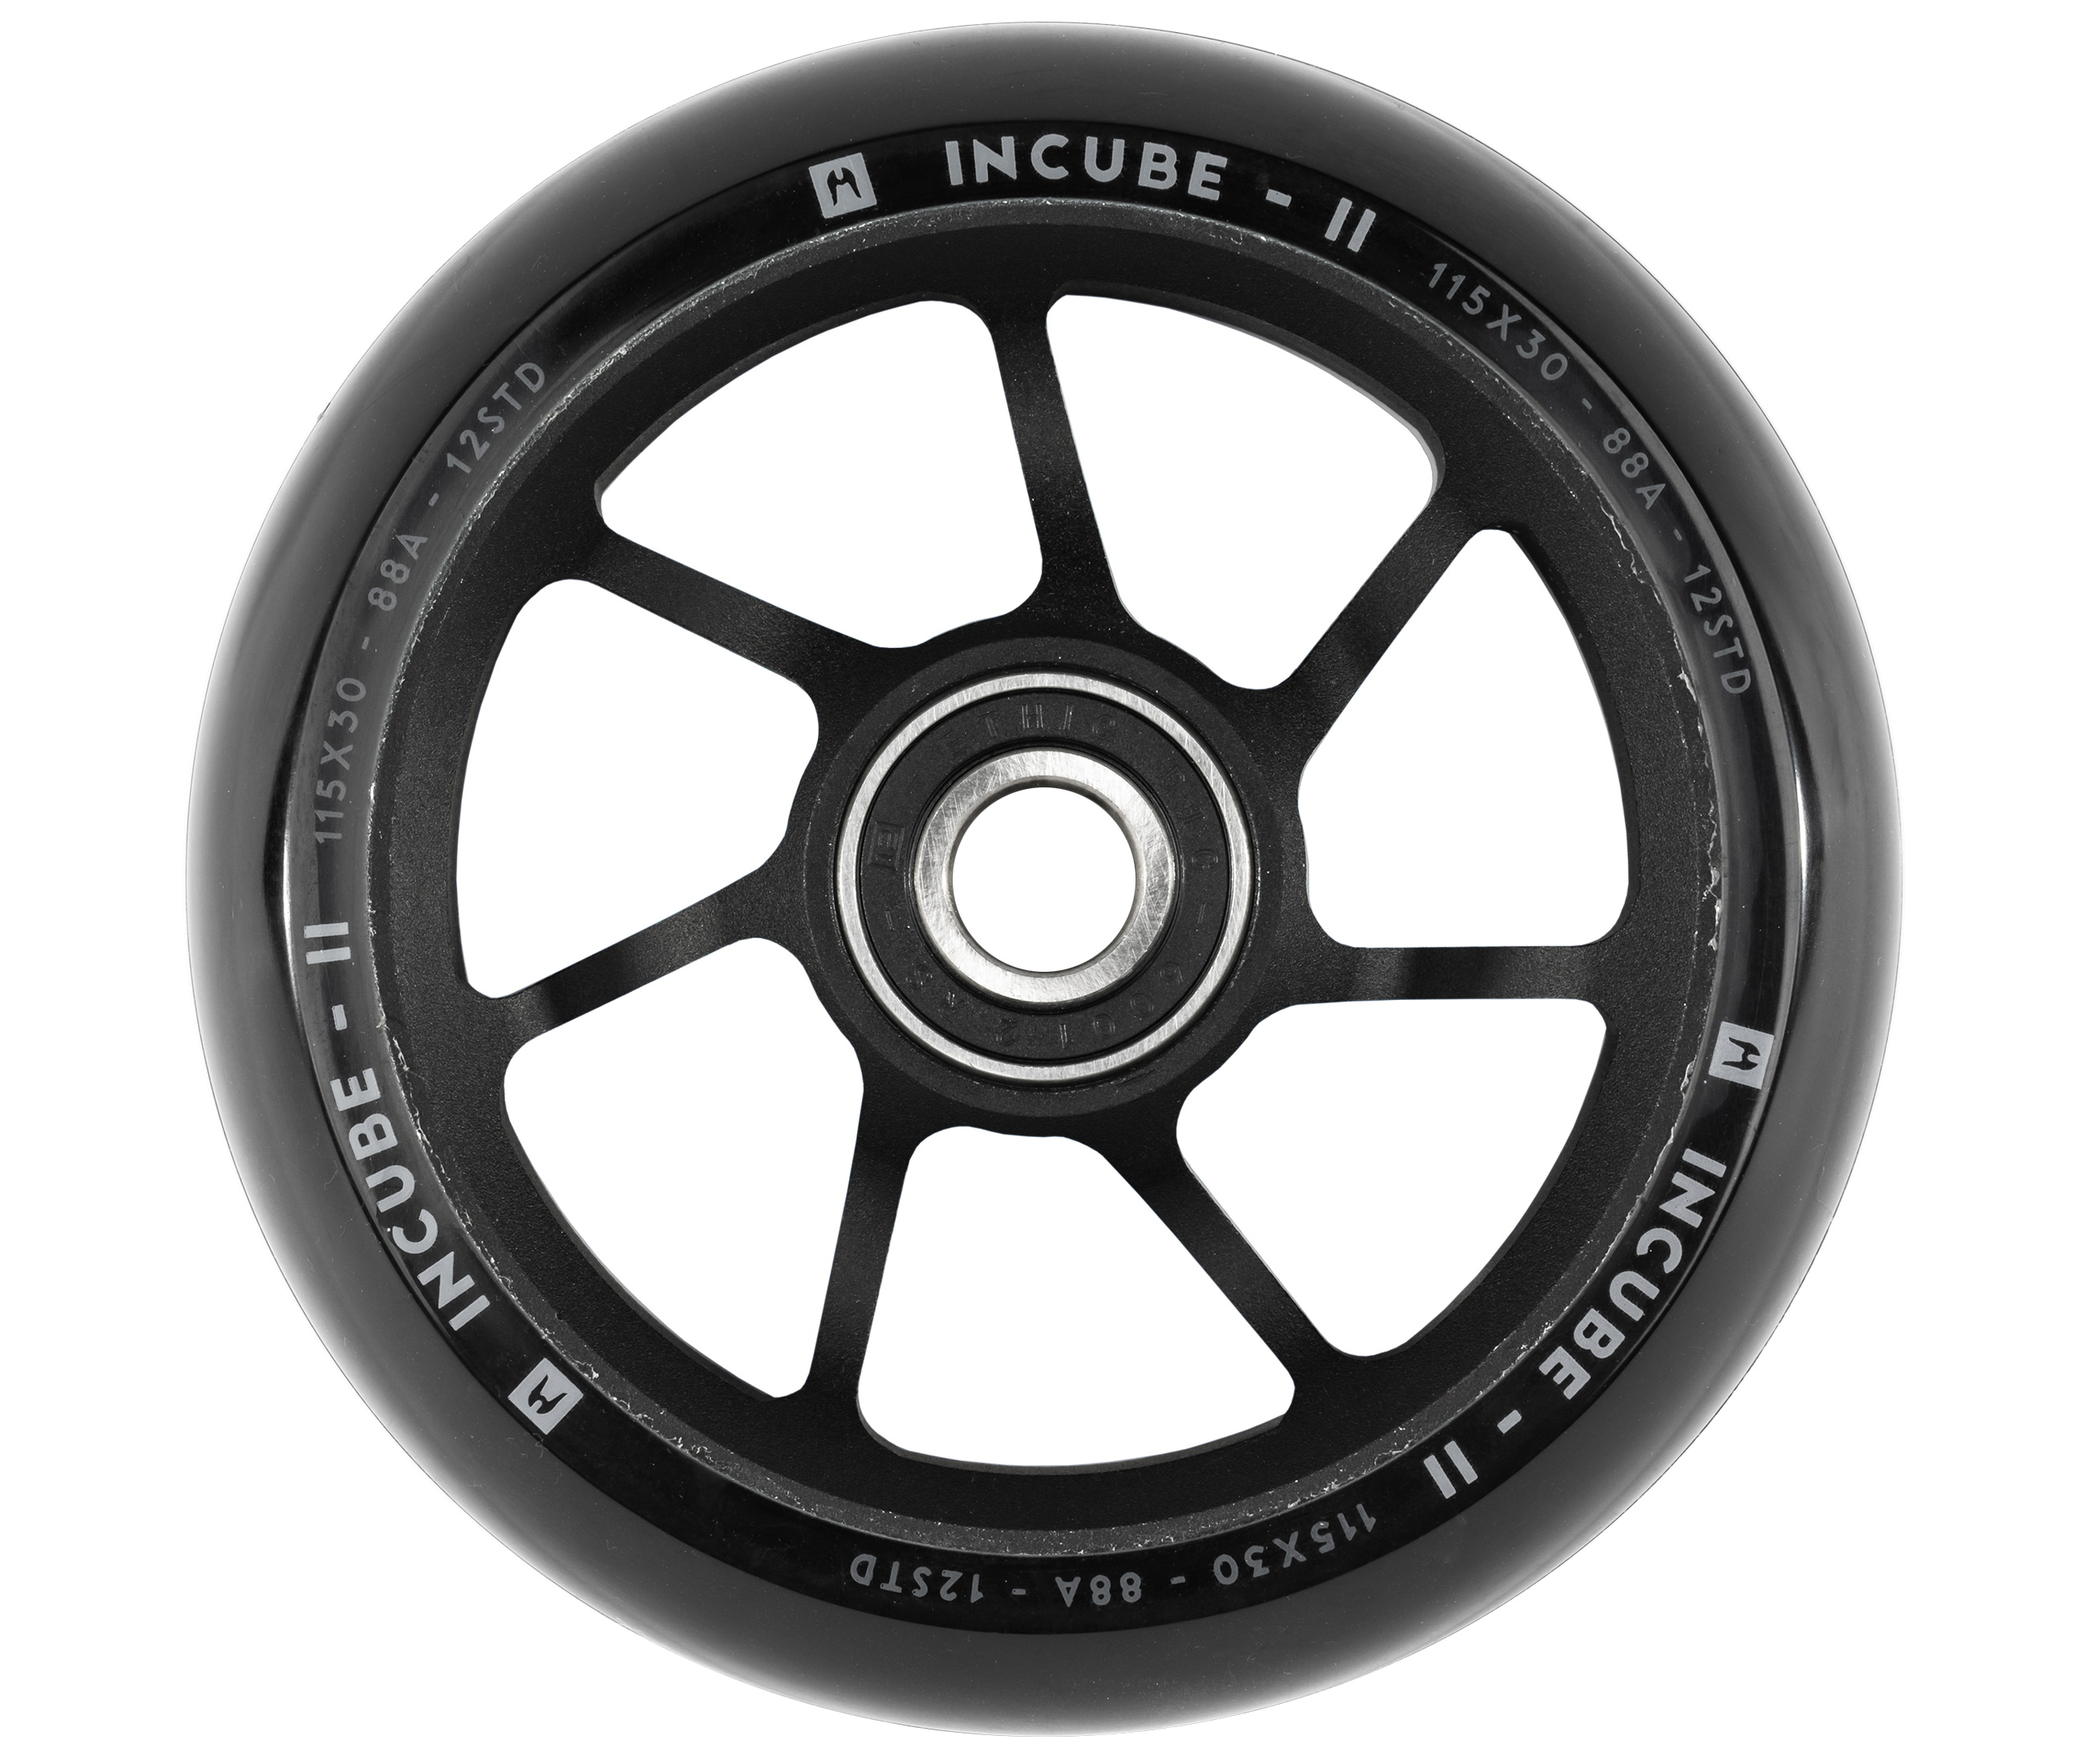 Ethic Incube V2 wheel 115mm 12 STD